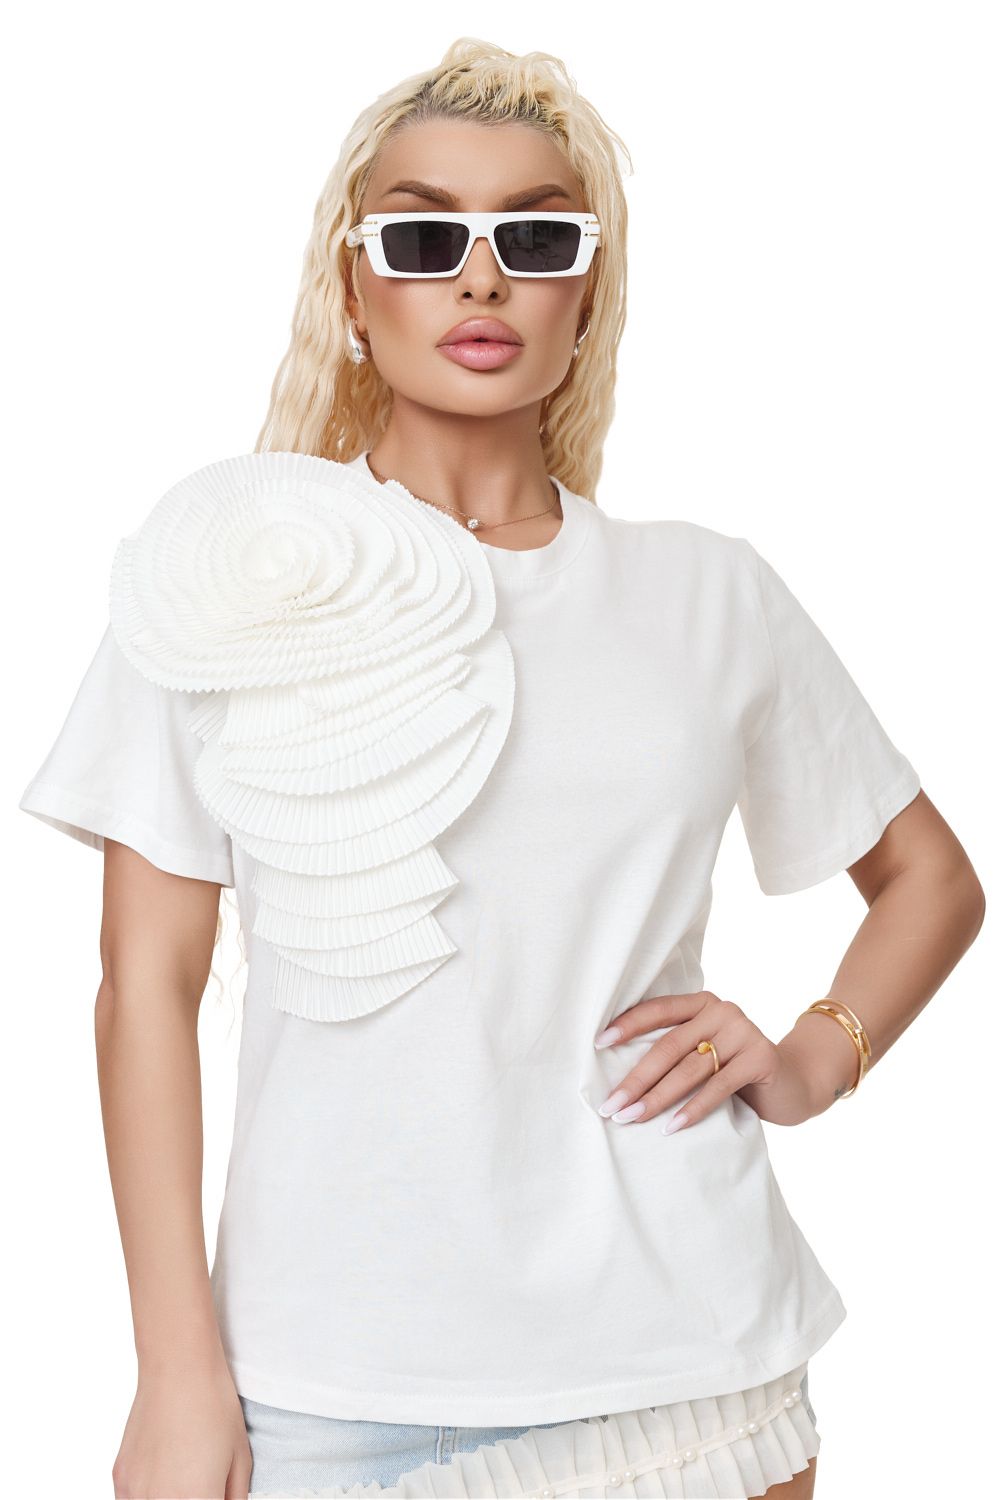 Tramia Bogas casual white ladies shirt